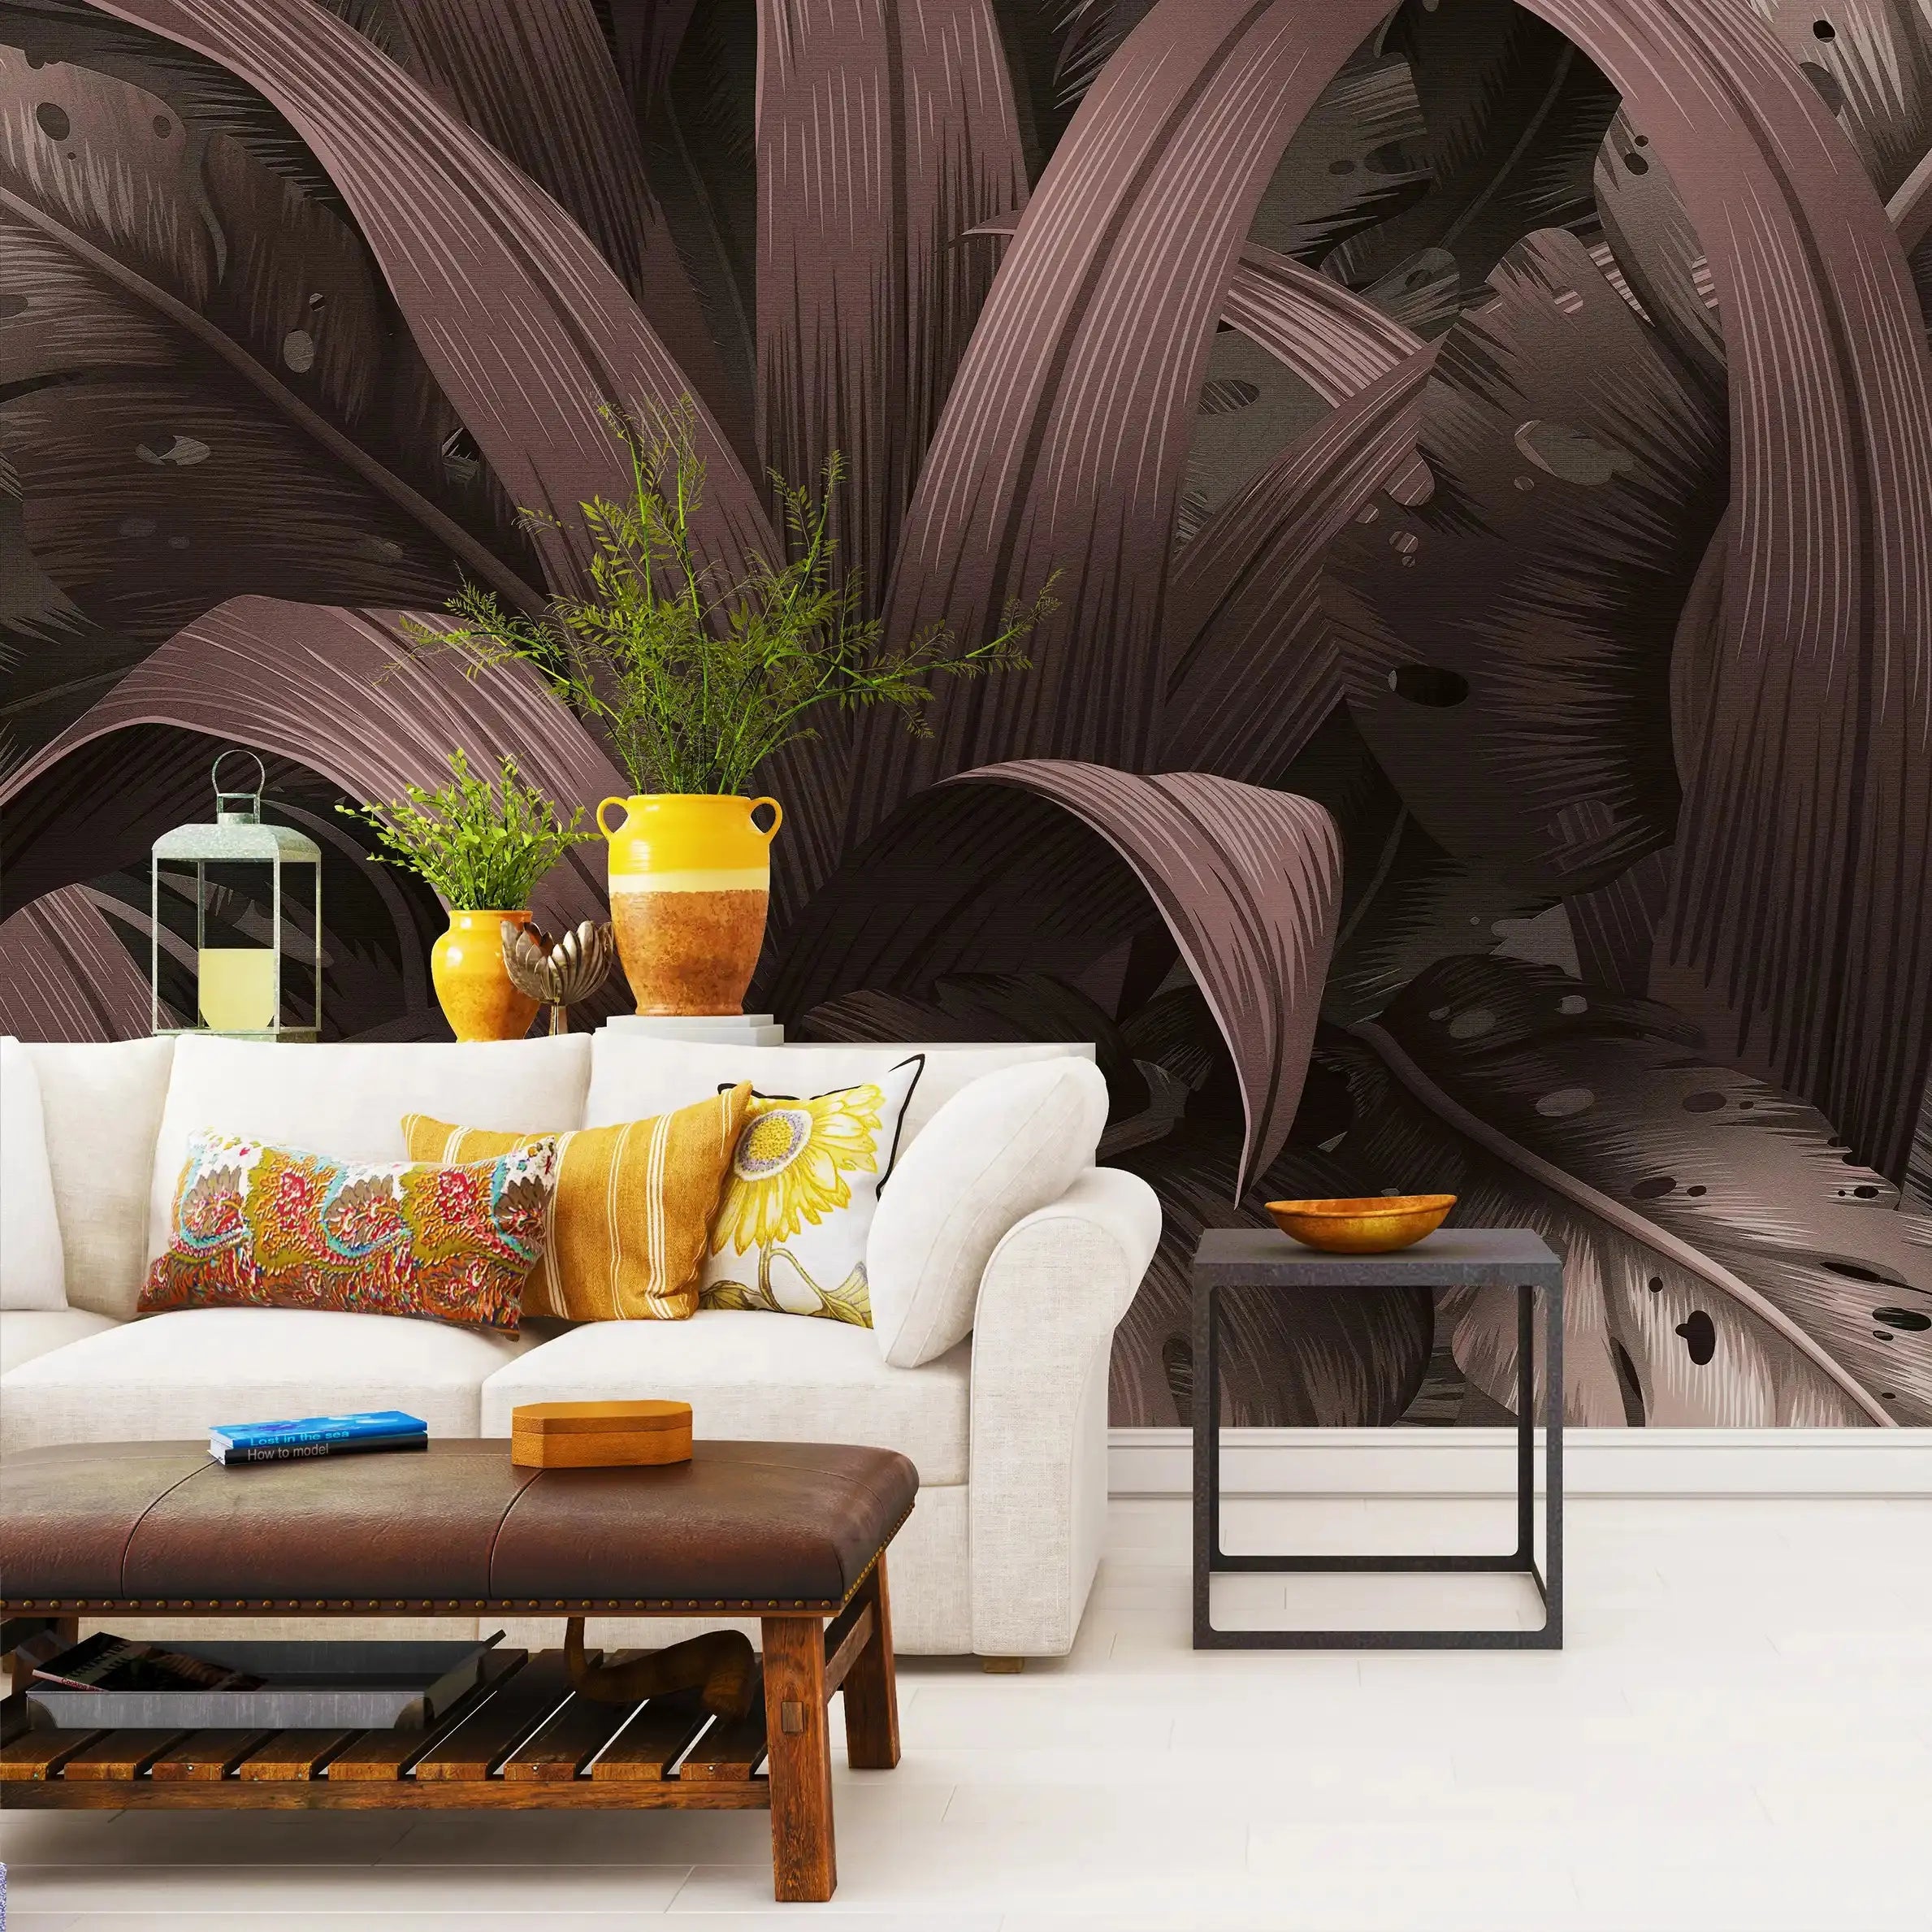 3049-F / Maroon Jungle Peel and Stick Mural - Temporary Wallpaper, Tropical Rainforest, Easy Install Wallpaper for Wall Decor, DIY Decor, and Room Decor - Artevella